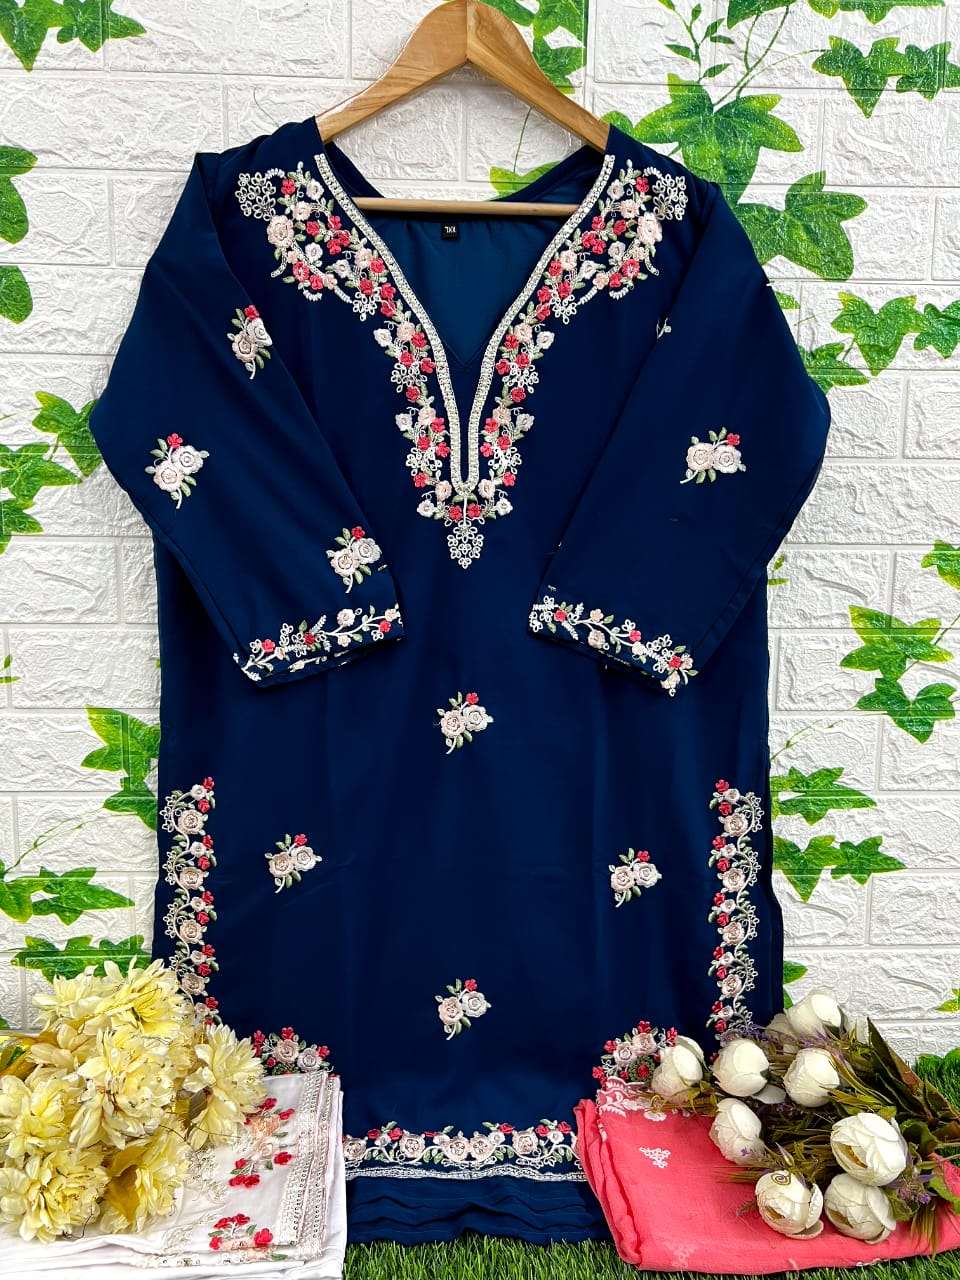 dinsaa suits 194 series readymade designer pakistani salwar suits online supplier surat 